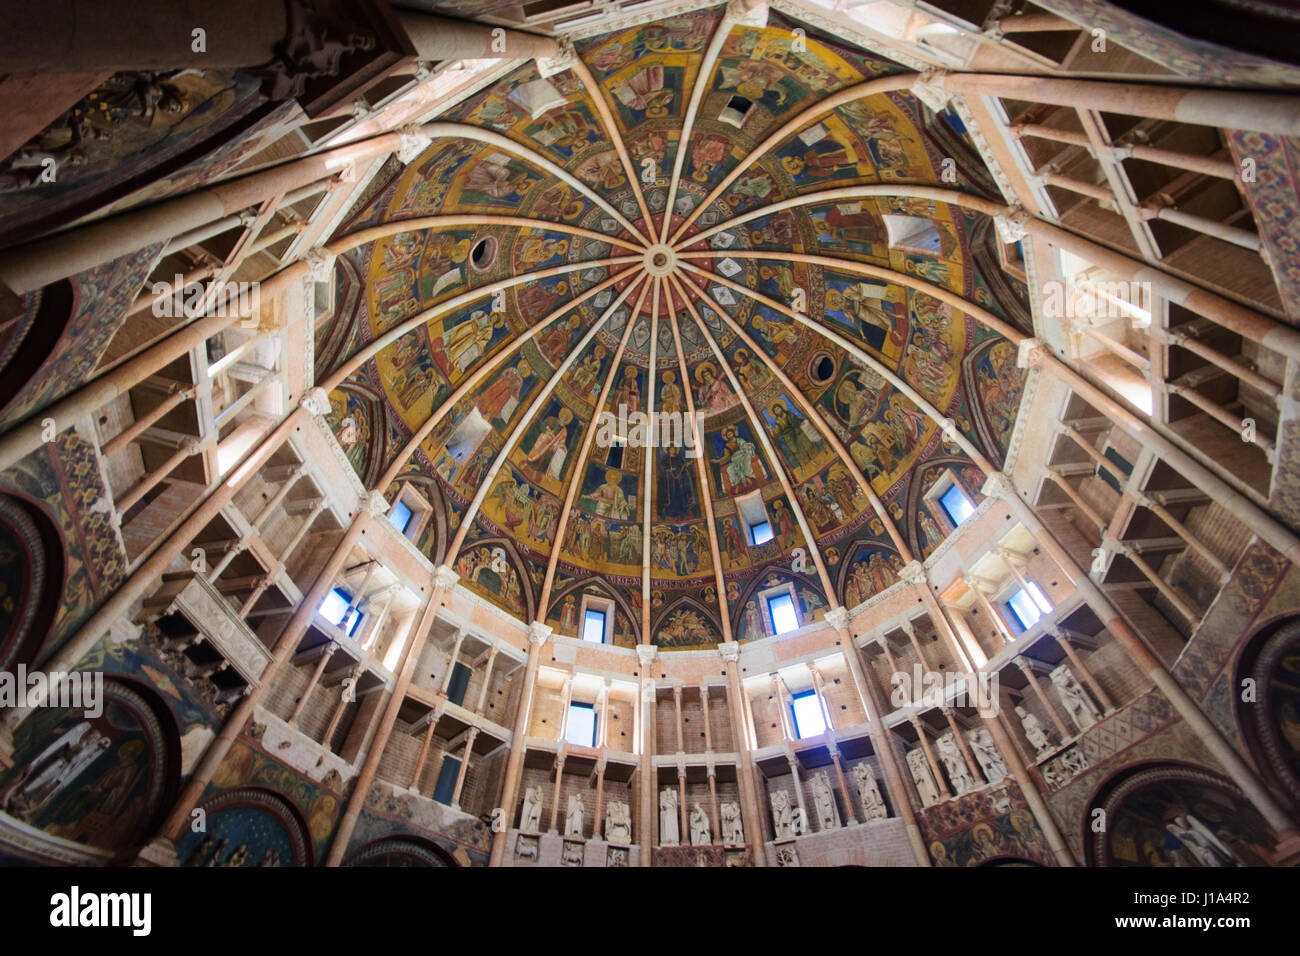 PARMA, ITALY - JAN 22, 2015: The ceiling fresco in the Baptistery of Parma, Emilia-Romagna, Italy Stock Photo